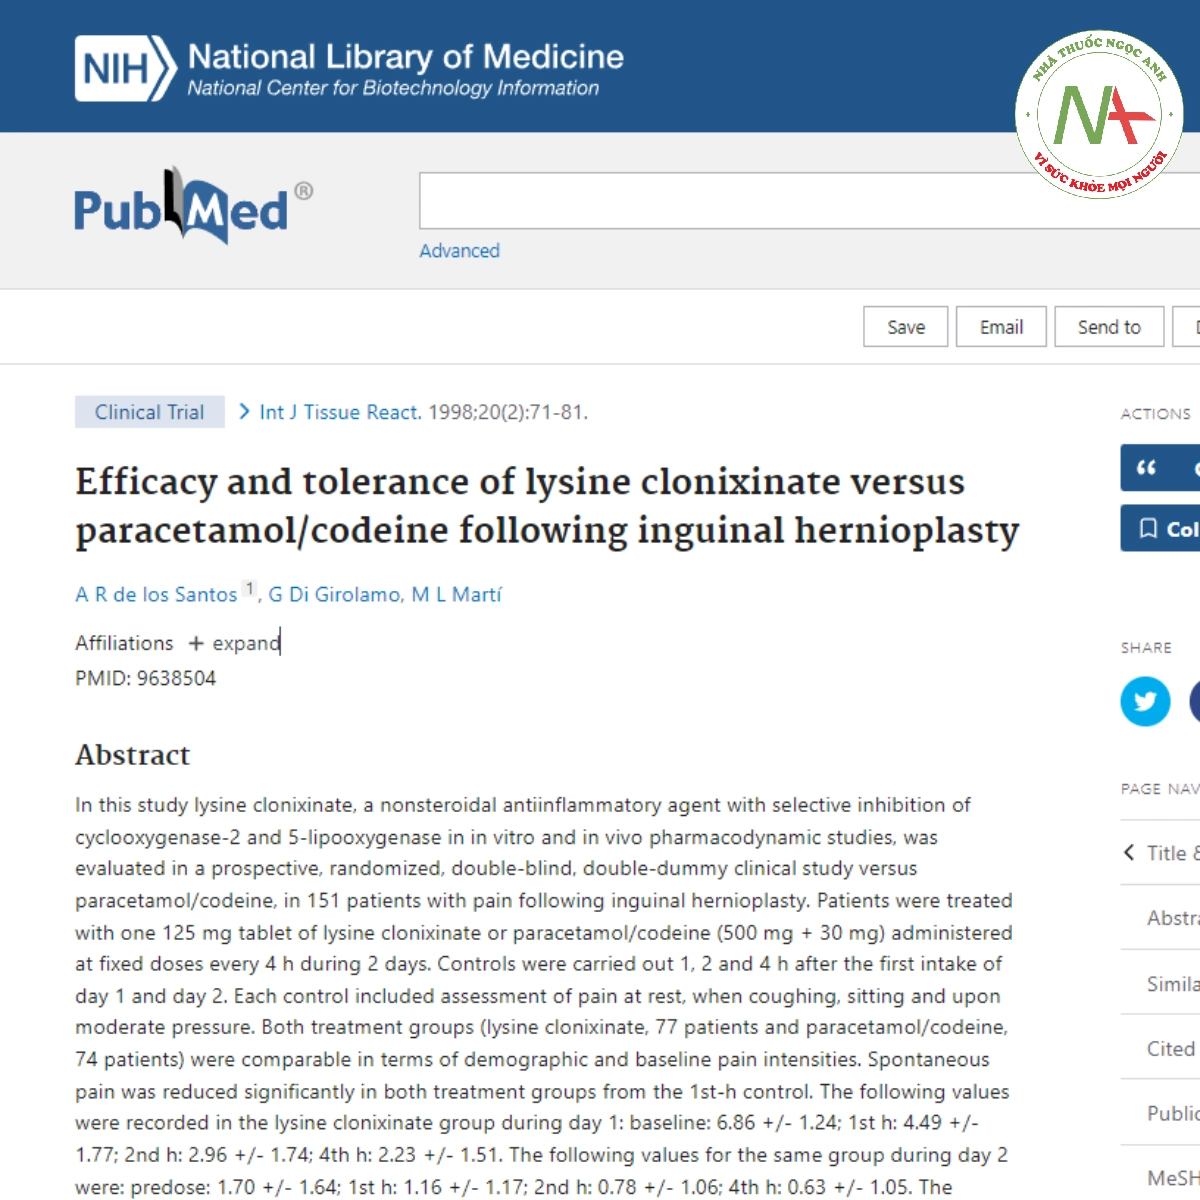 Efficacy and tolerance of lysine clonixinate versus paracetamol/codeine following inguinal hernioplasty